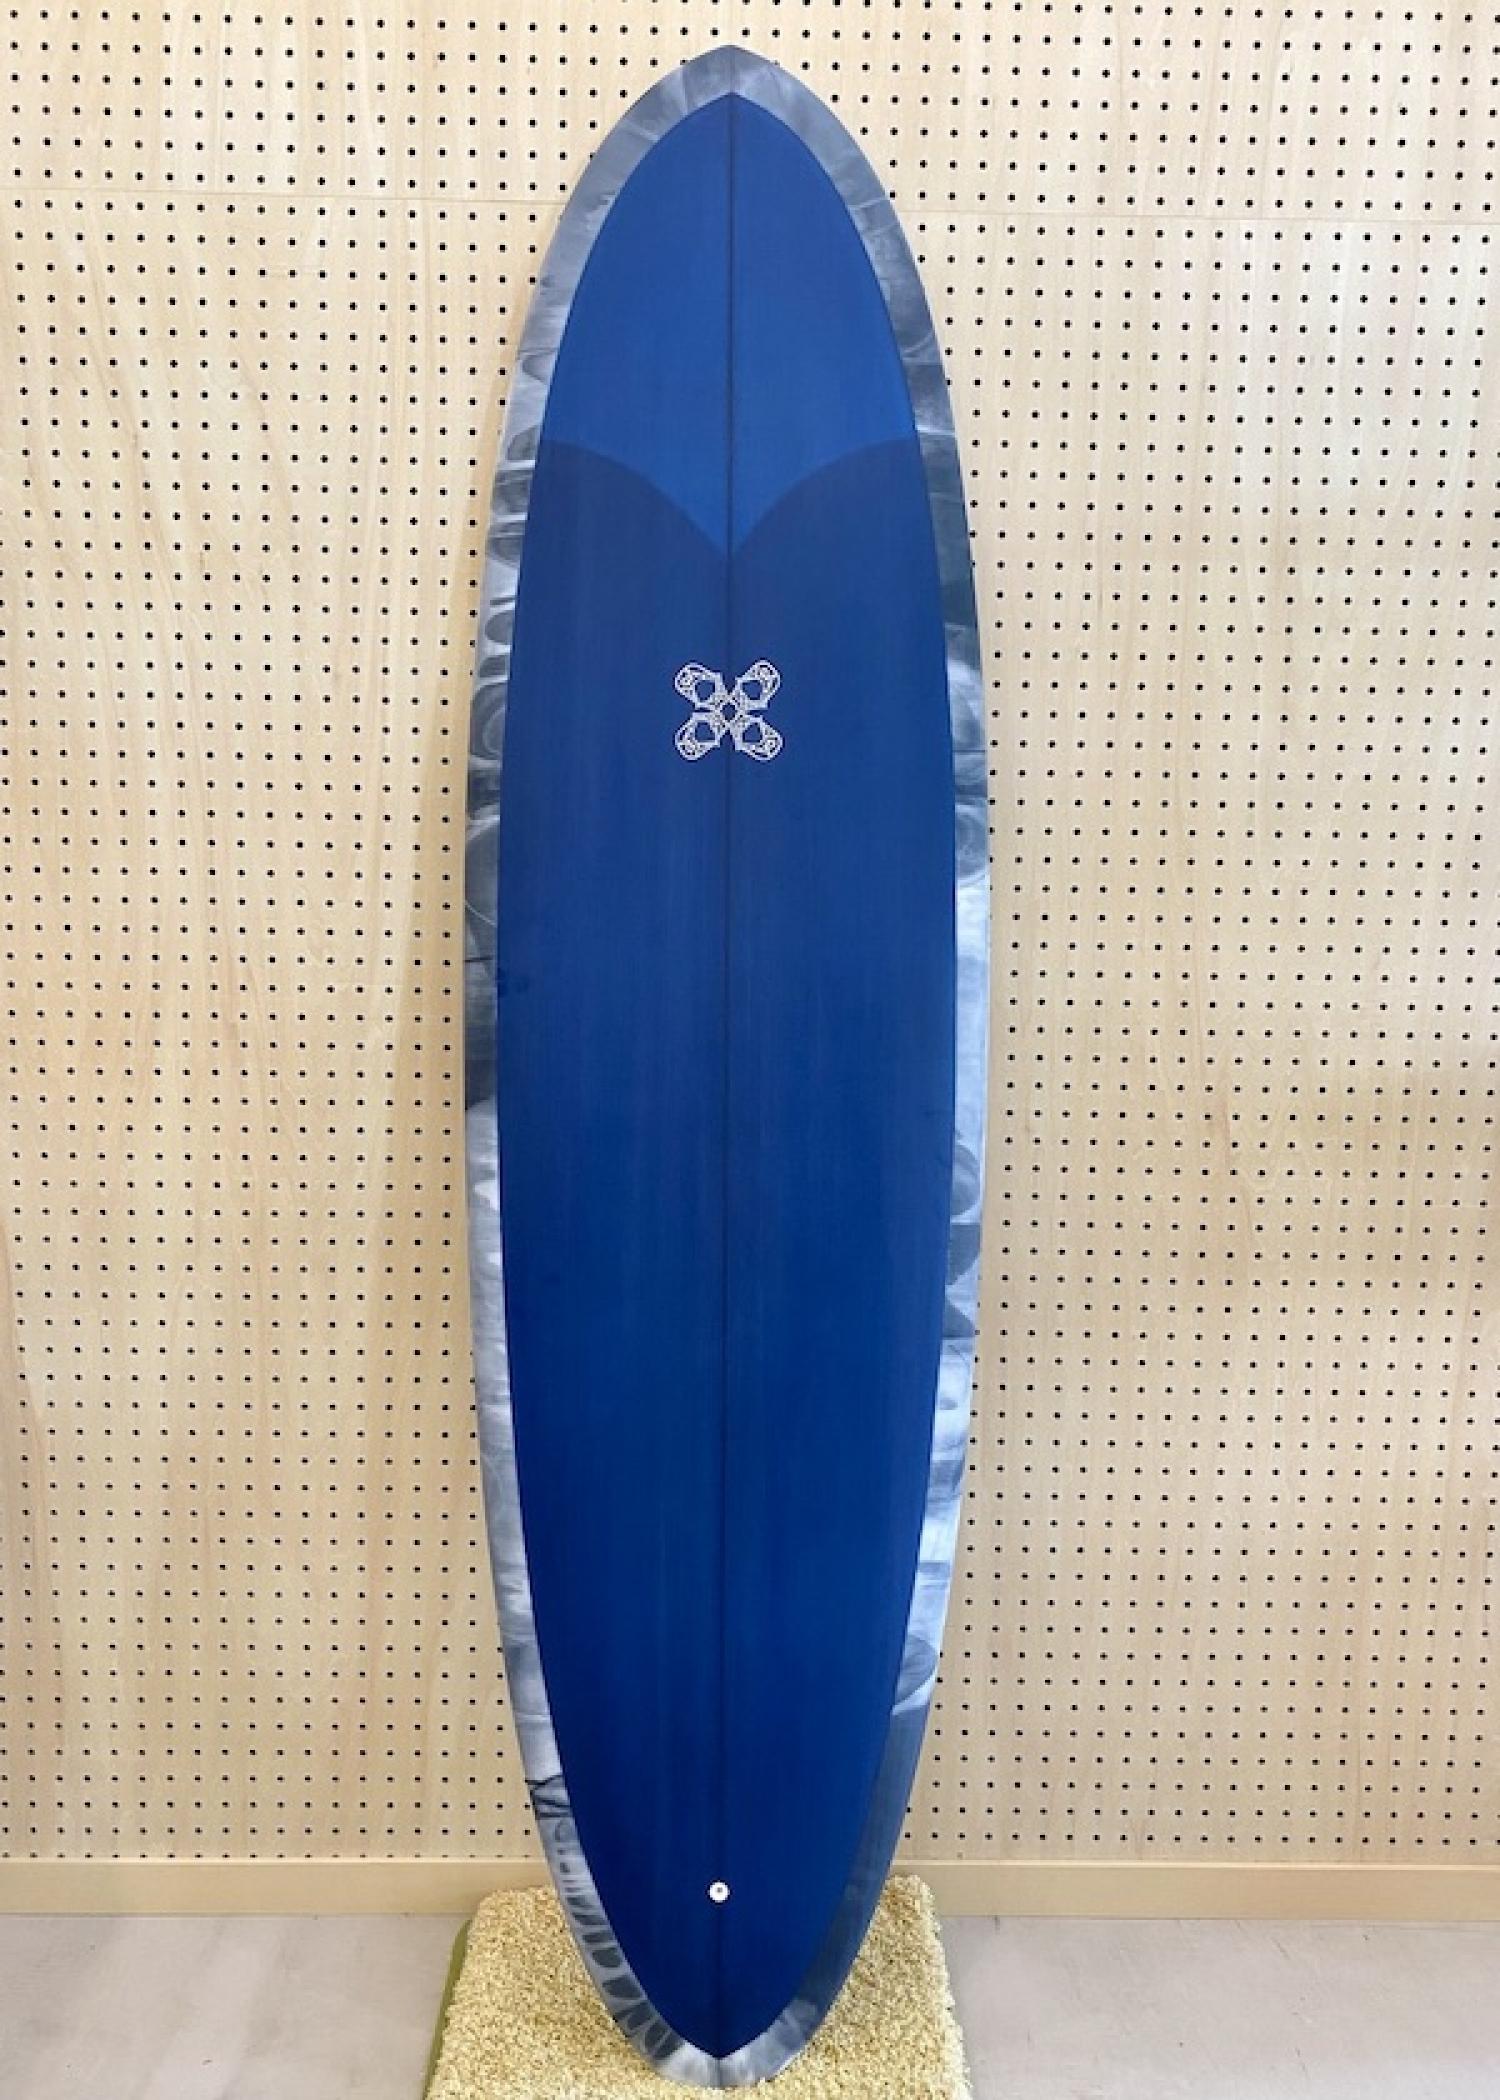 USED BOARDS （ENDURO 5.8 CHRISTENSON SURFBOARDS )|沖縄サーフィン 